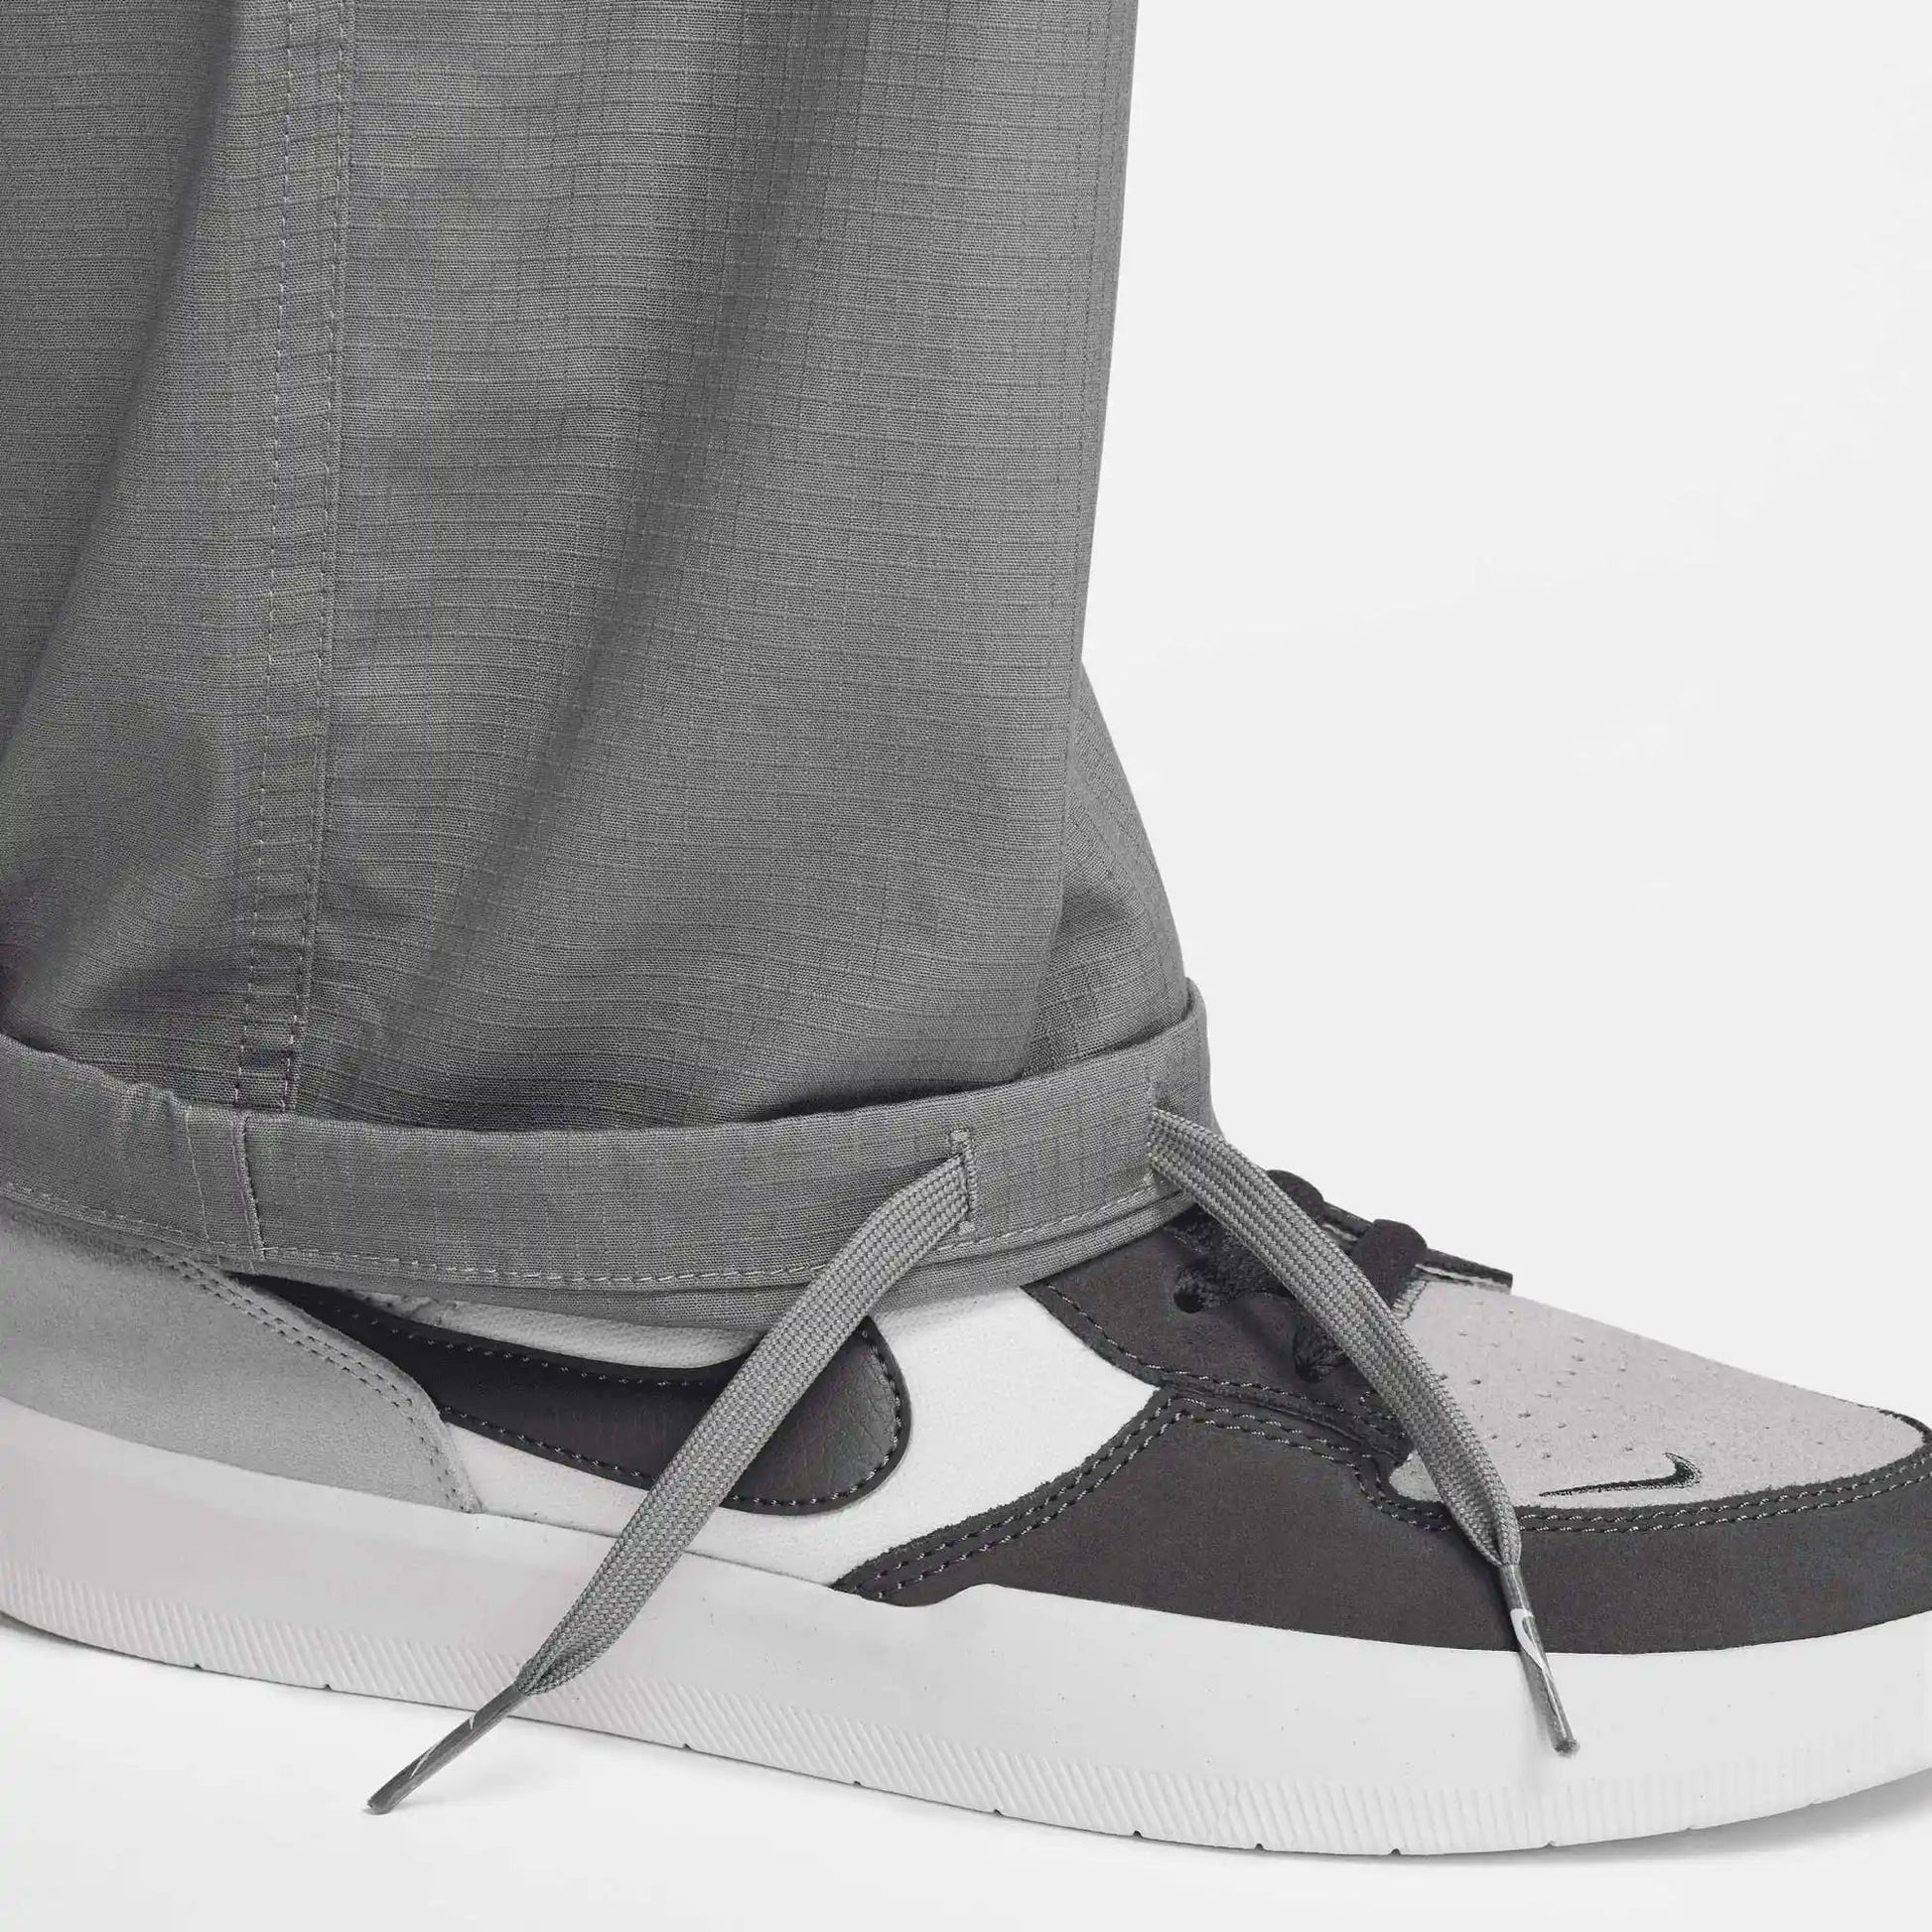 Nike SB Kearny Cargo Pants, smoke grey - Tiki Room Skateboards - 8